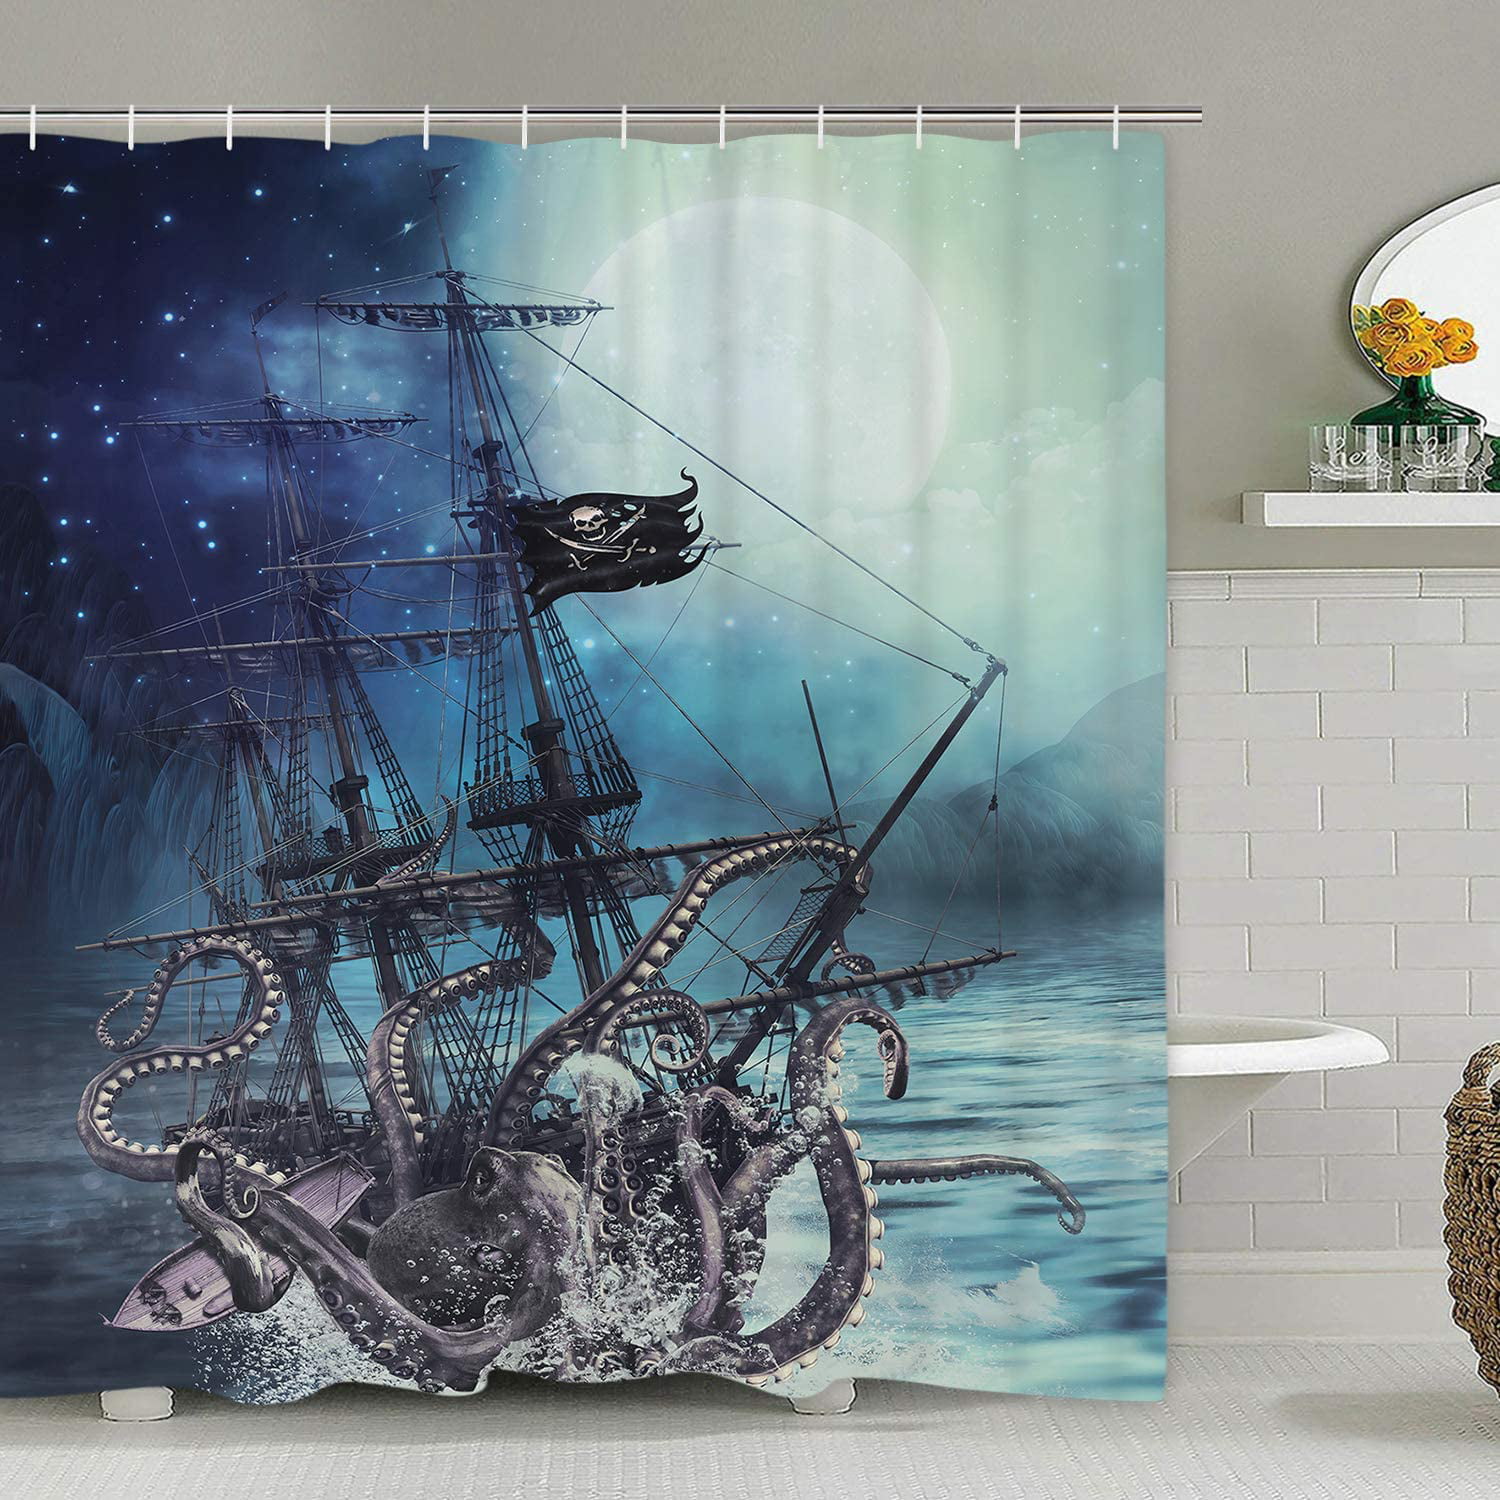 Pirates Mermaid Polyester Waterproof Bathroom Fabric Shower Curtain 12 Hook 